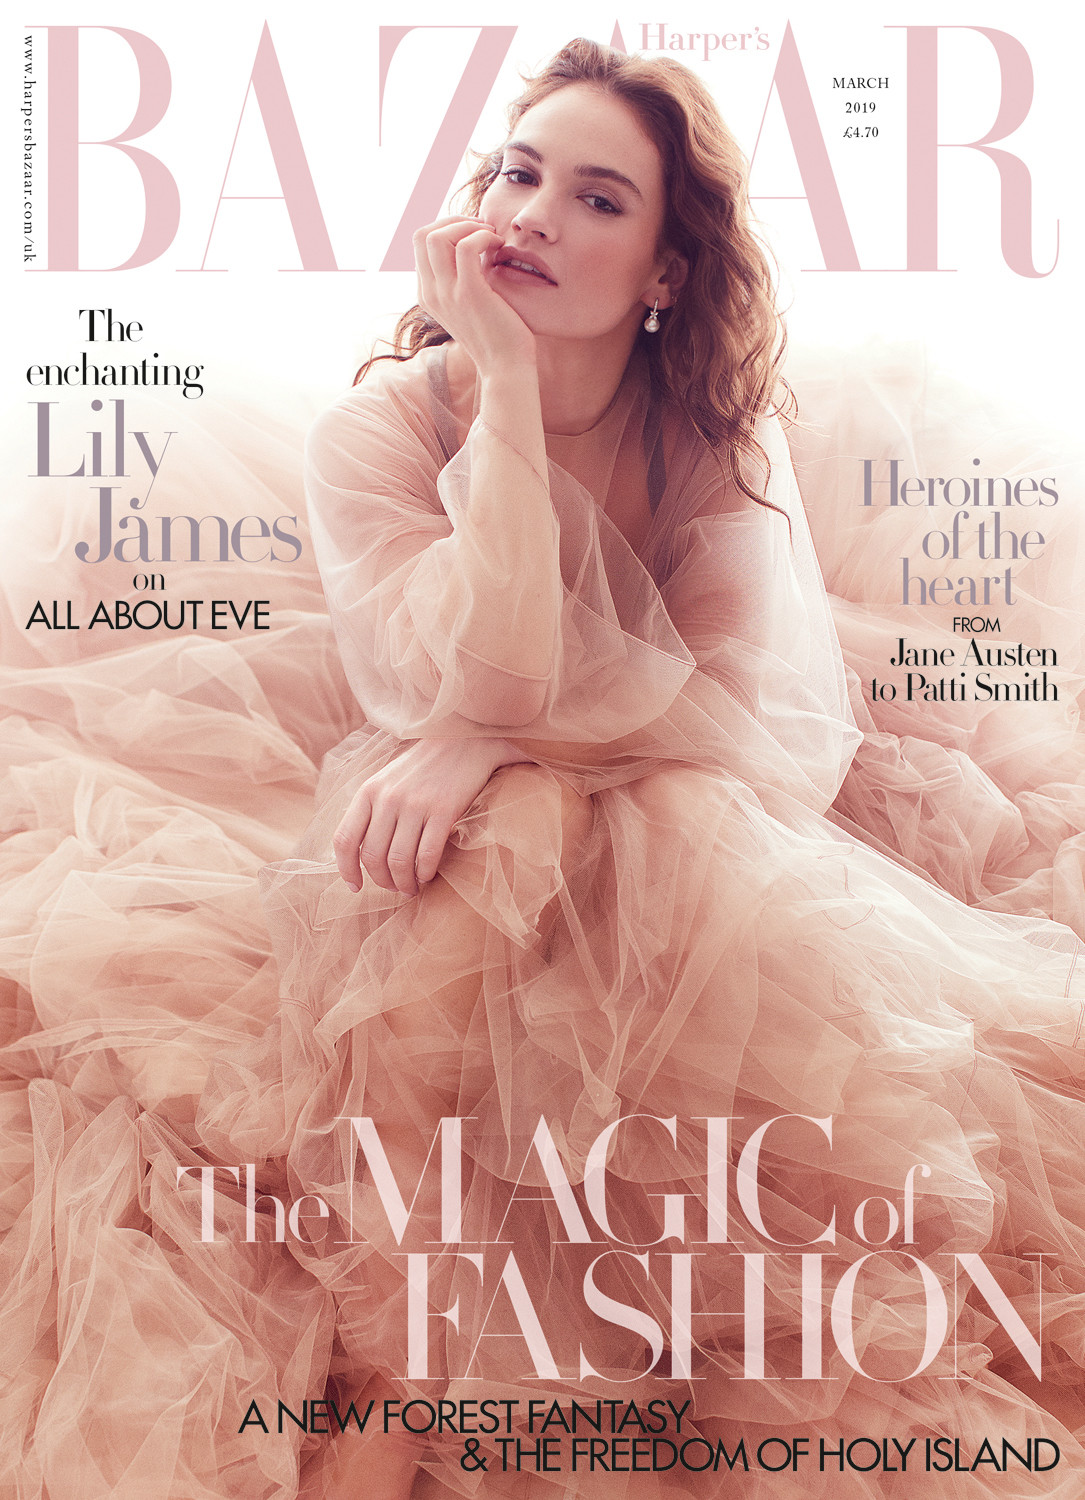 Harper's Bazaar Uk March 2019 Cover Story Editorial